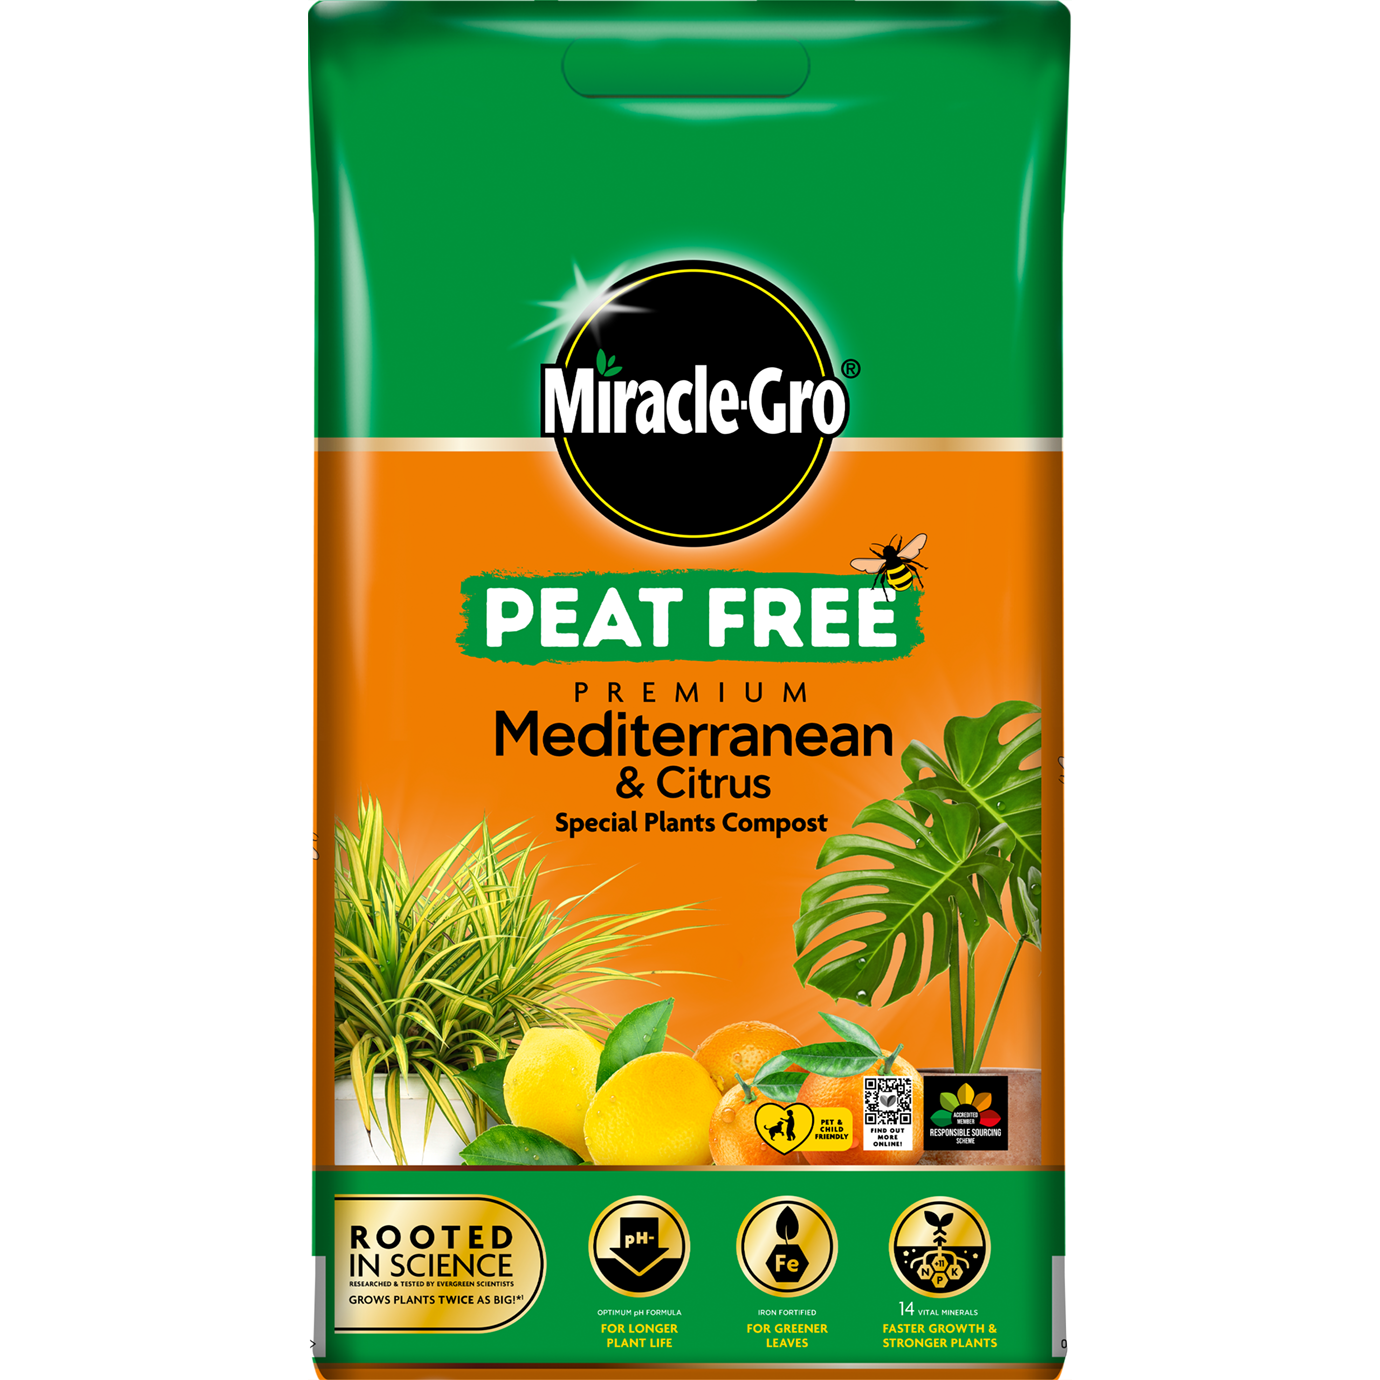 Miracle-Gro Premium Mediterranean & Citrus Compost, Peat free 10L Bag